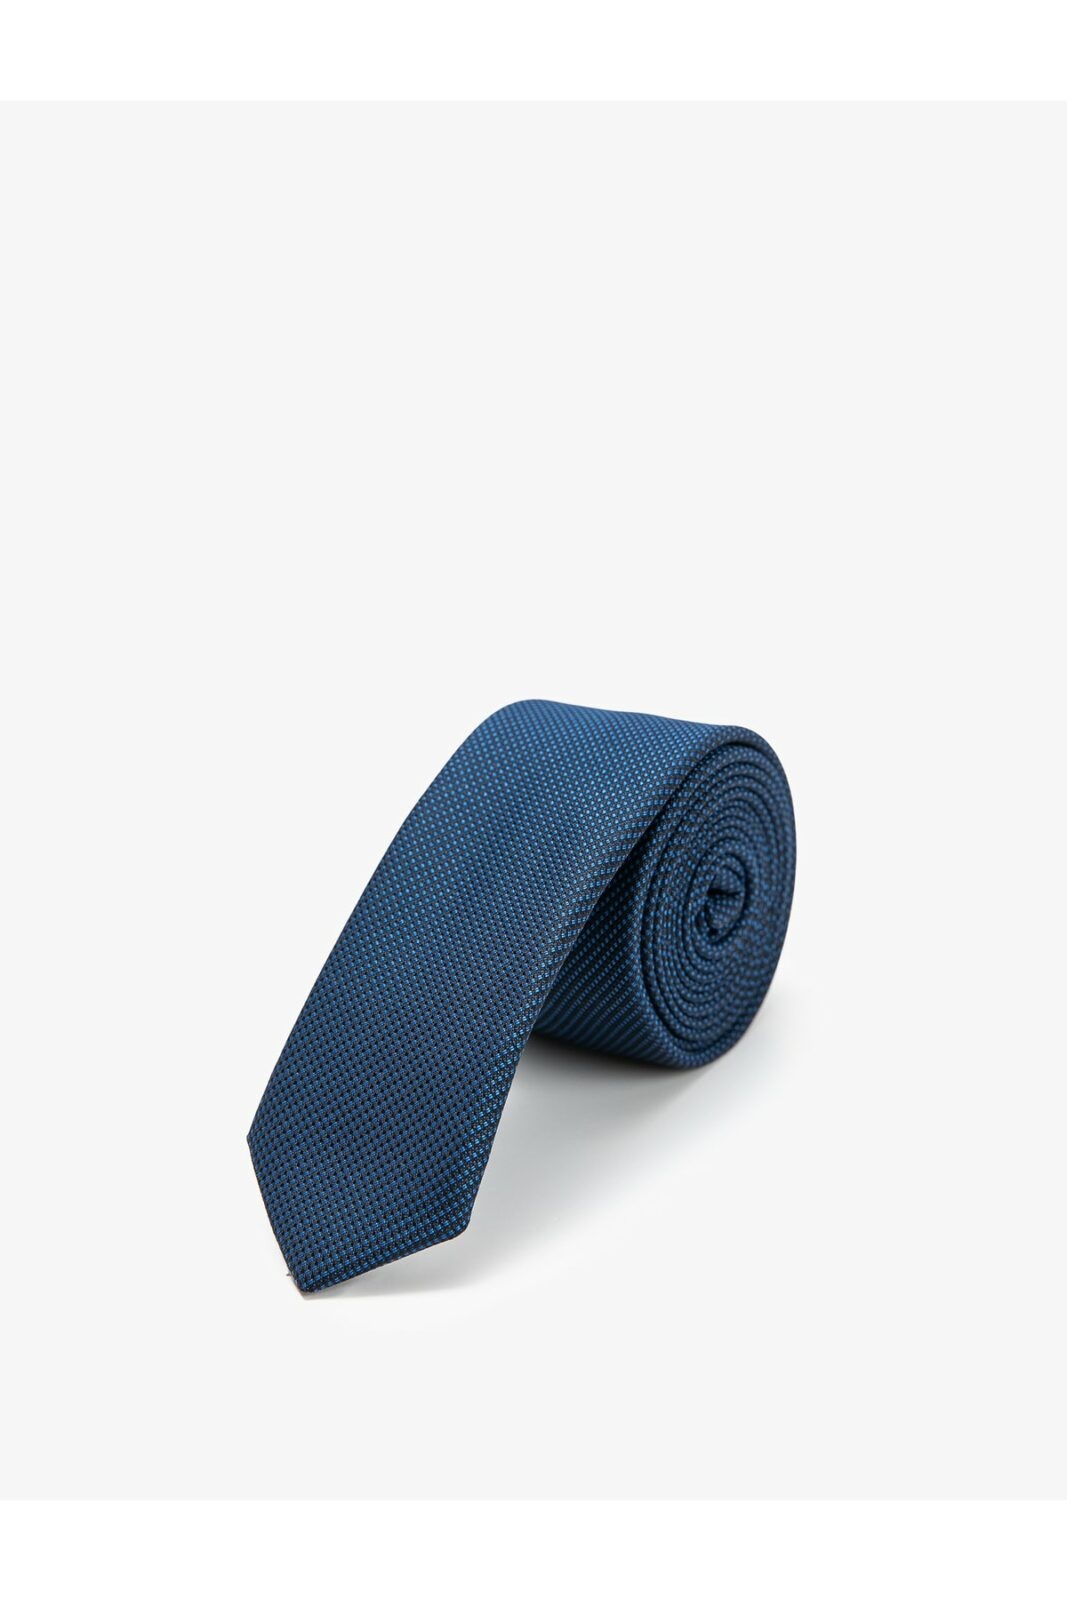 Koton Tie - Navy blue